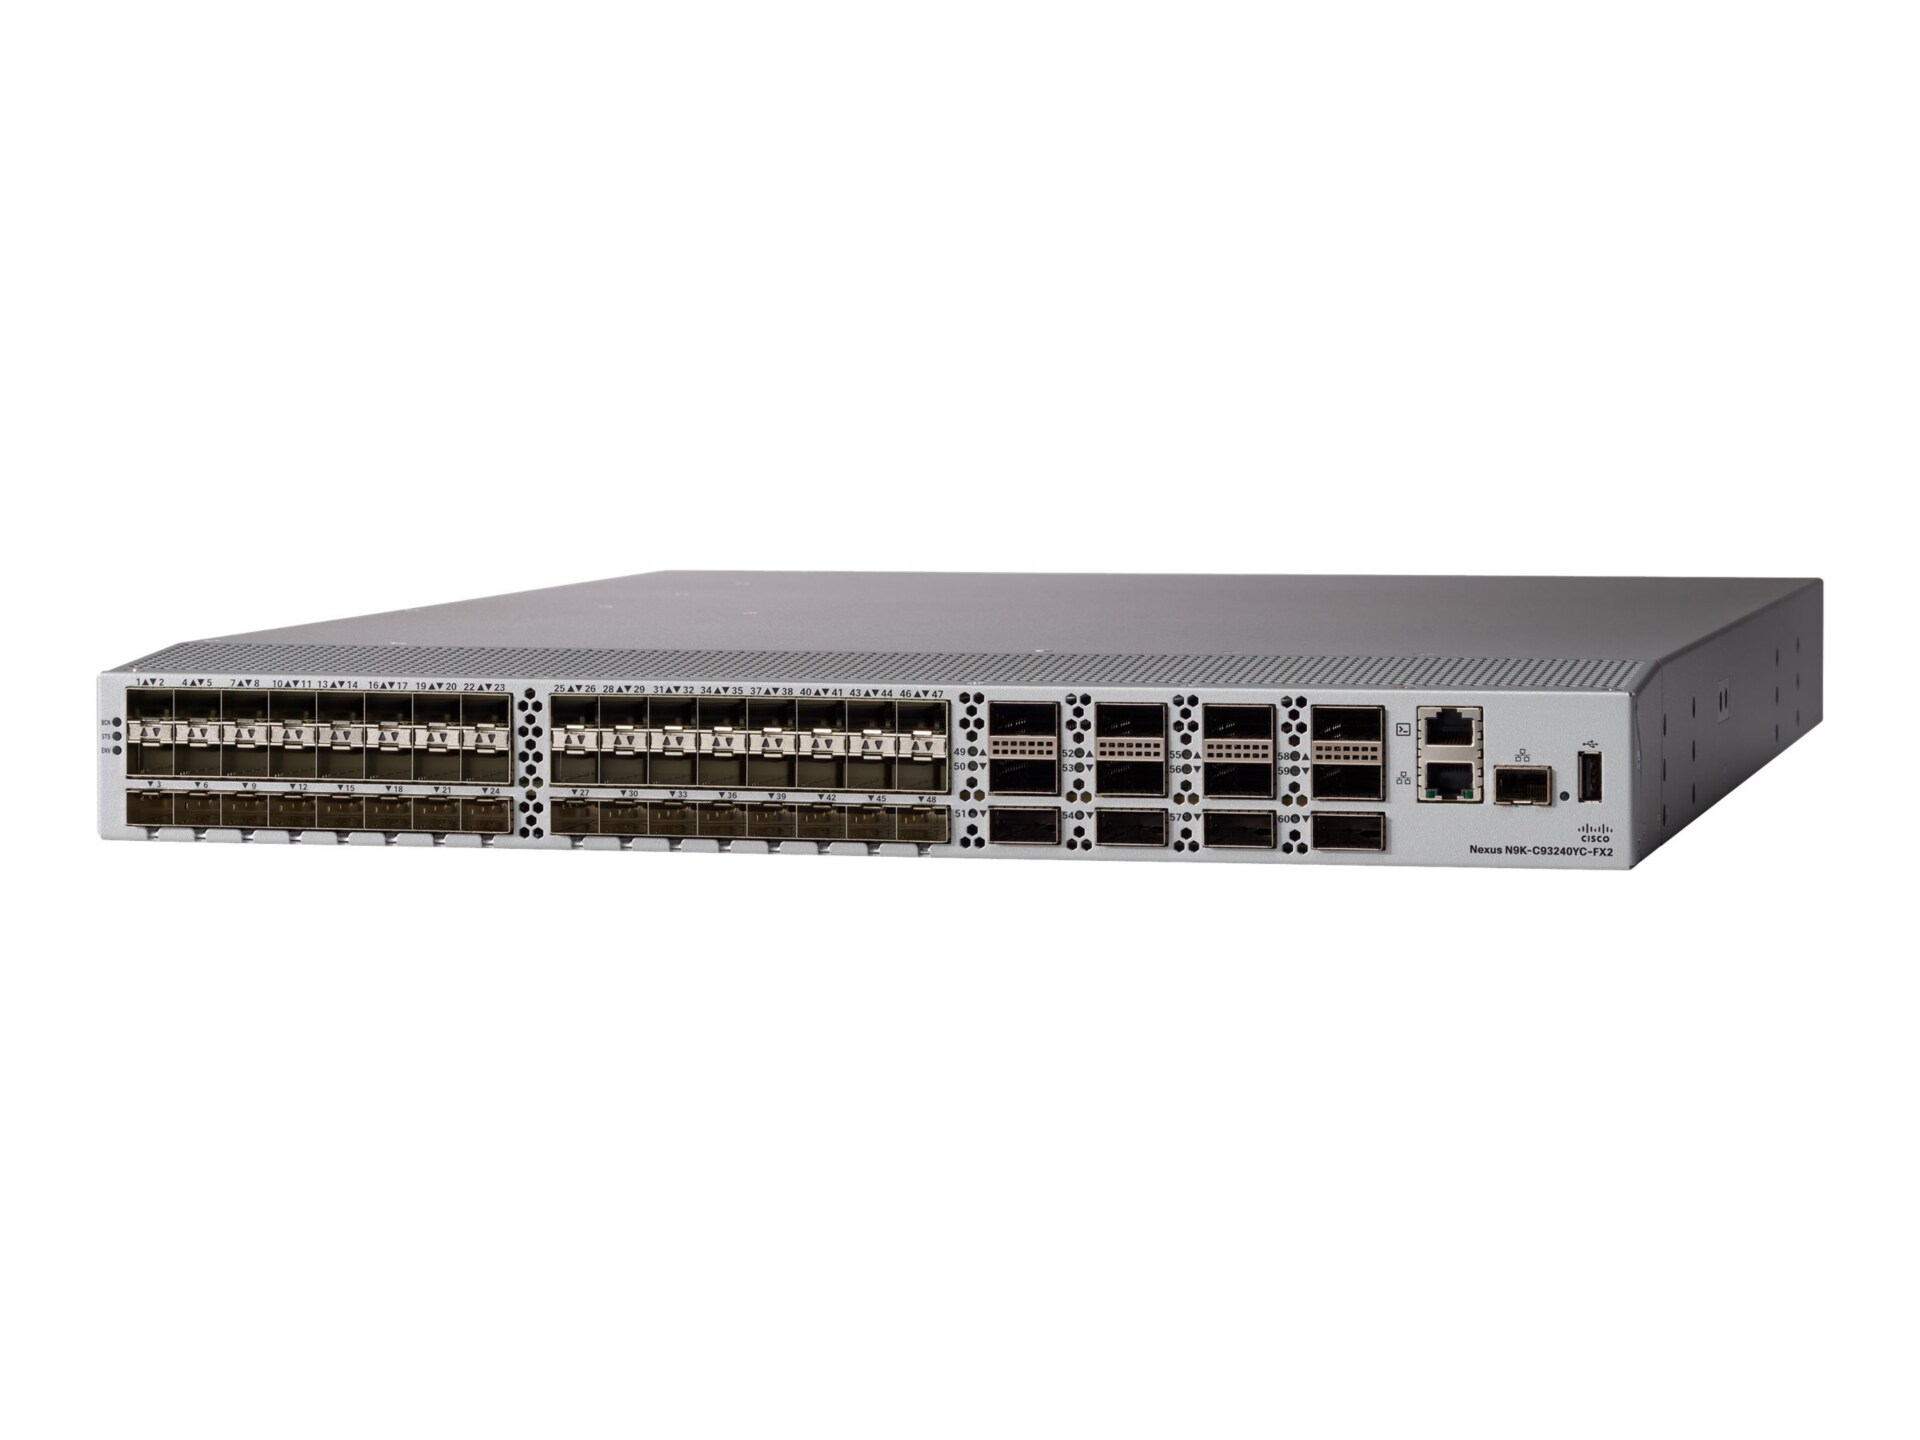 Cisco Nexus 93240YC-FX2 - switch - 48 ports - managed - rack-mountable